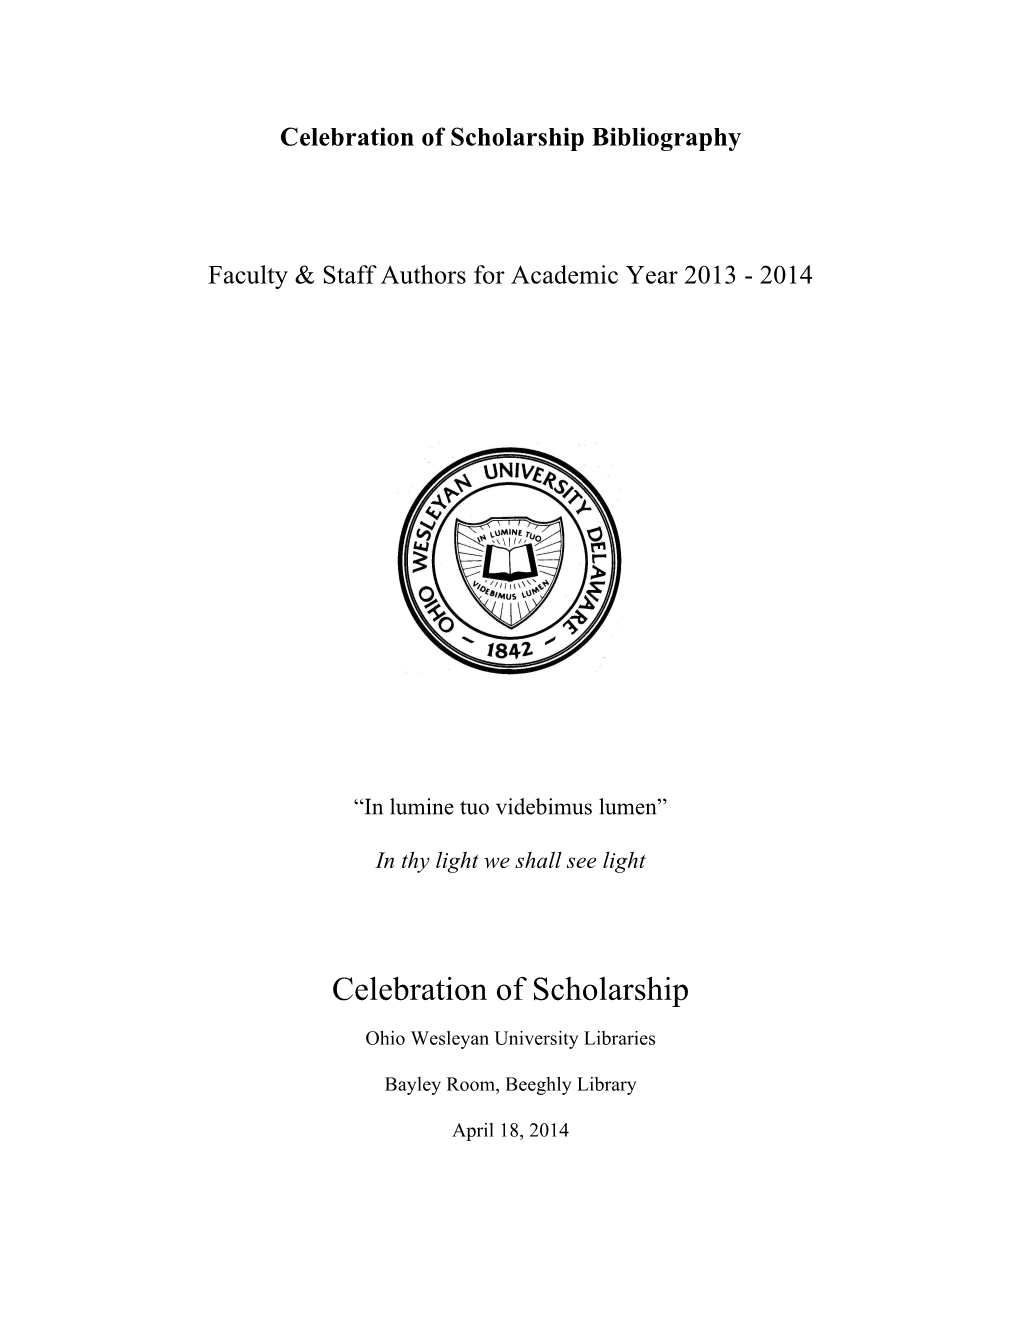 Celebration of Scholarship 2014